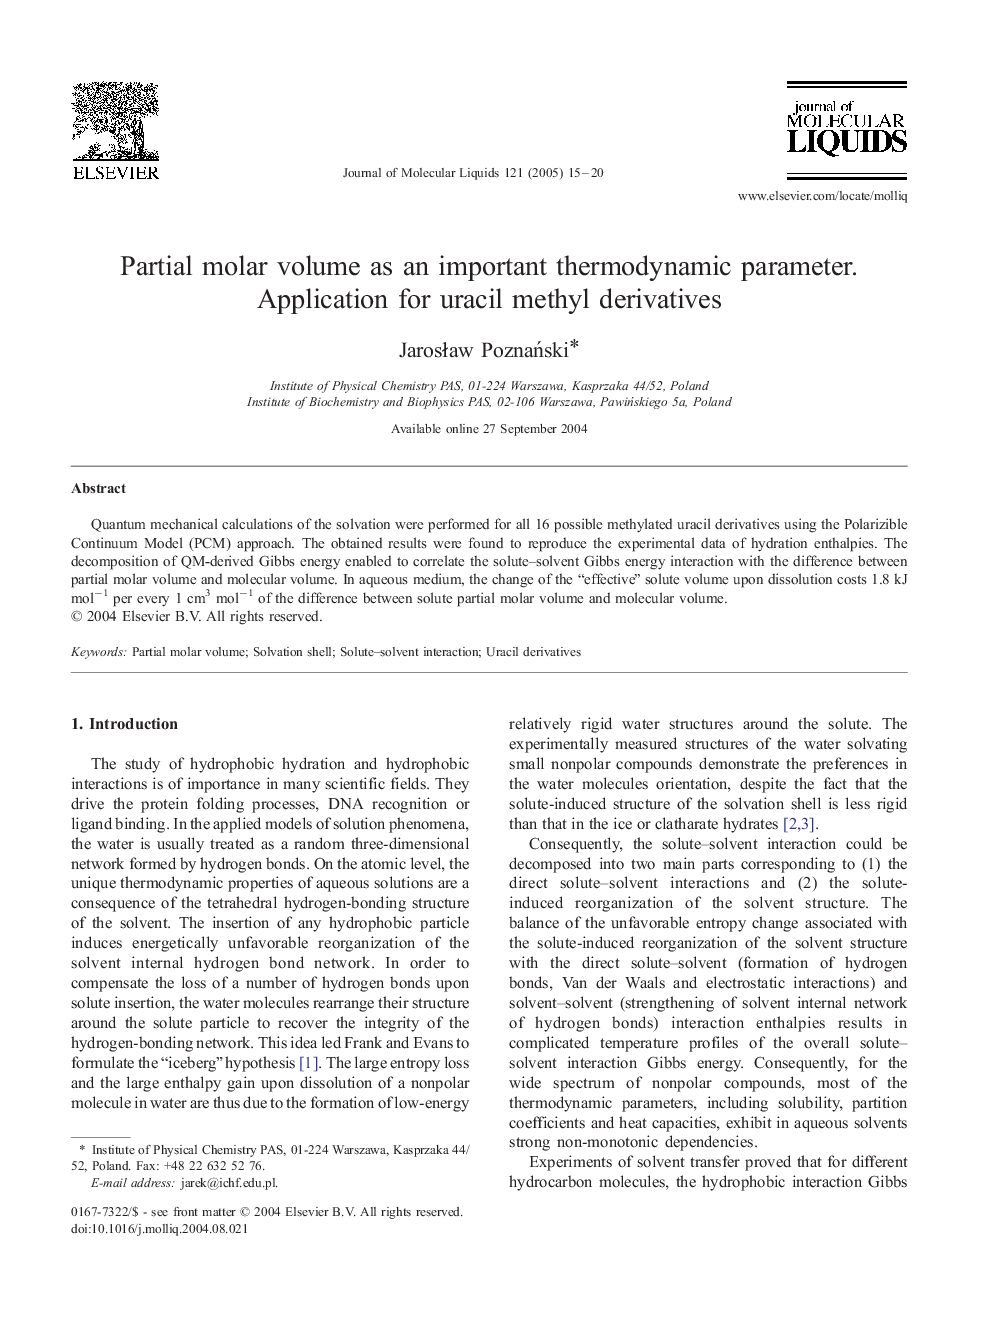 Partial molar volume as an important thermodynamic parameter. Application for uracil methyl derivatives